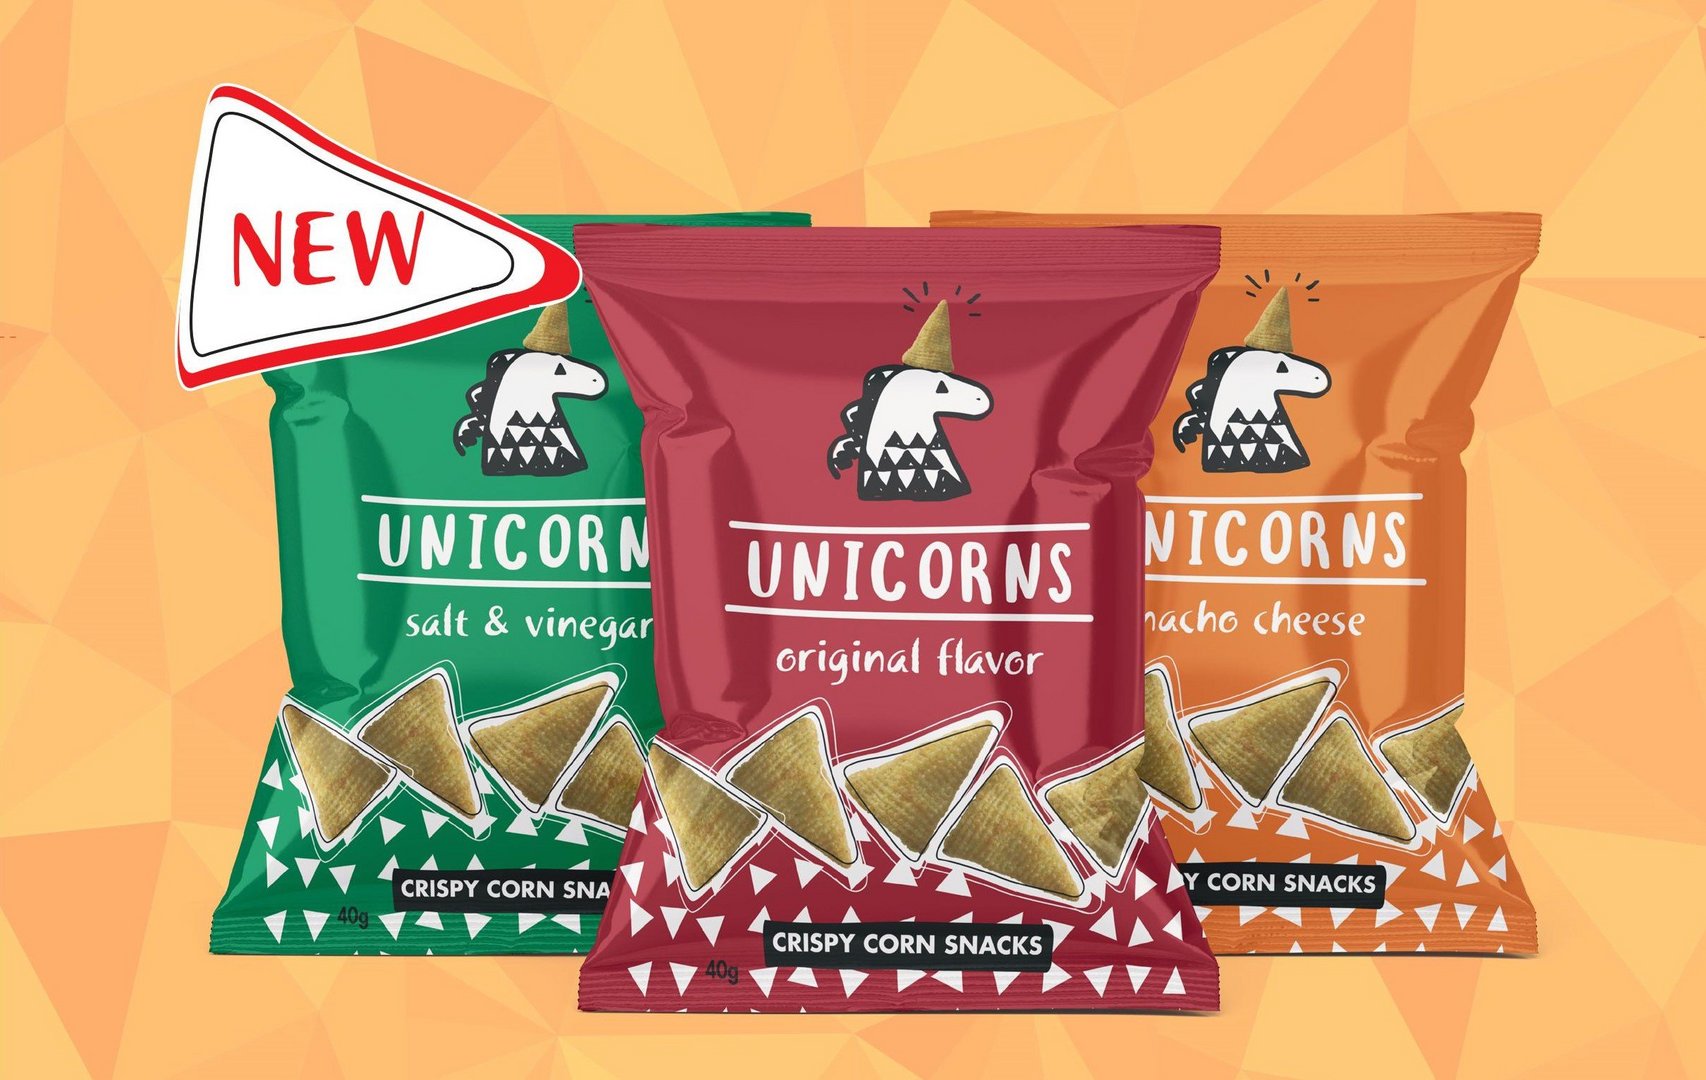 image UNICORNS: New crunchy corn snacks